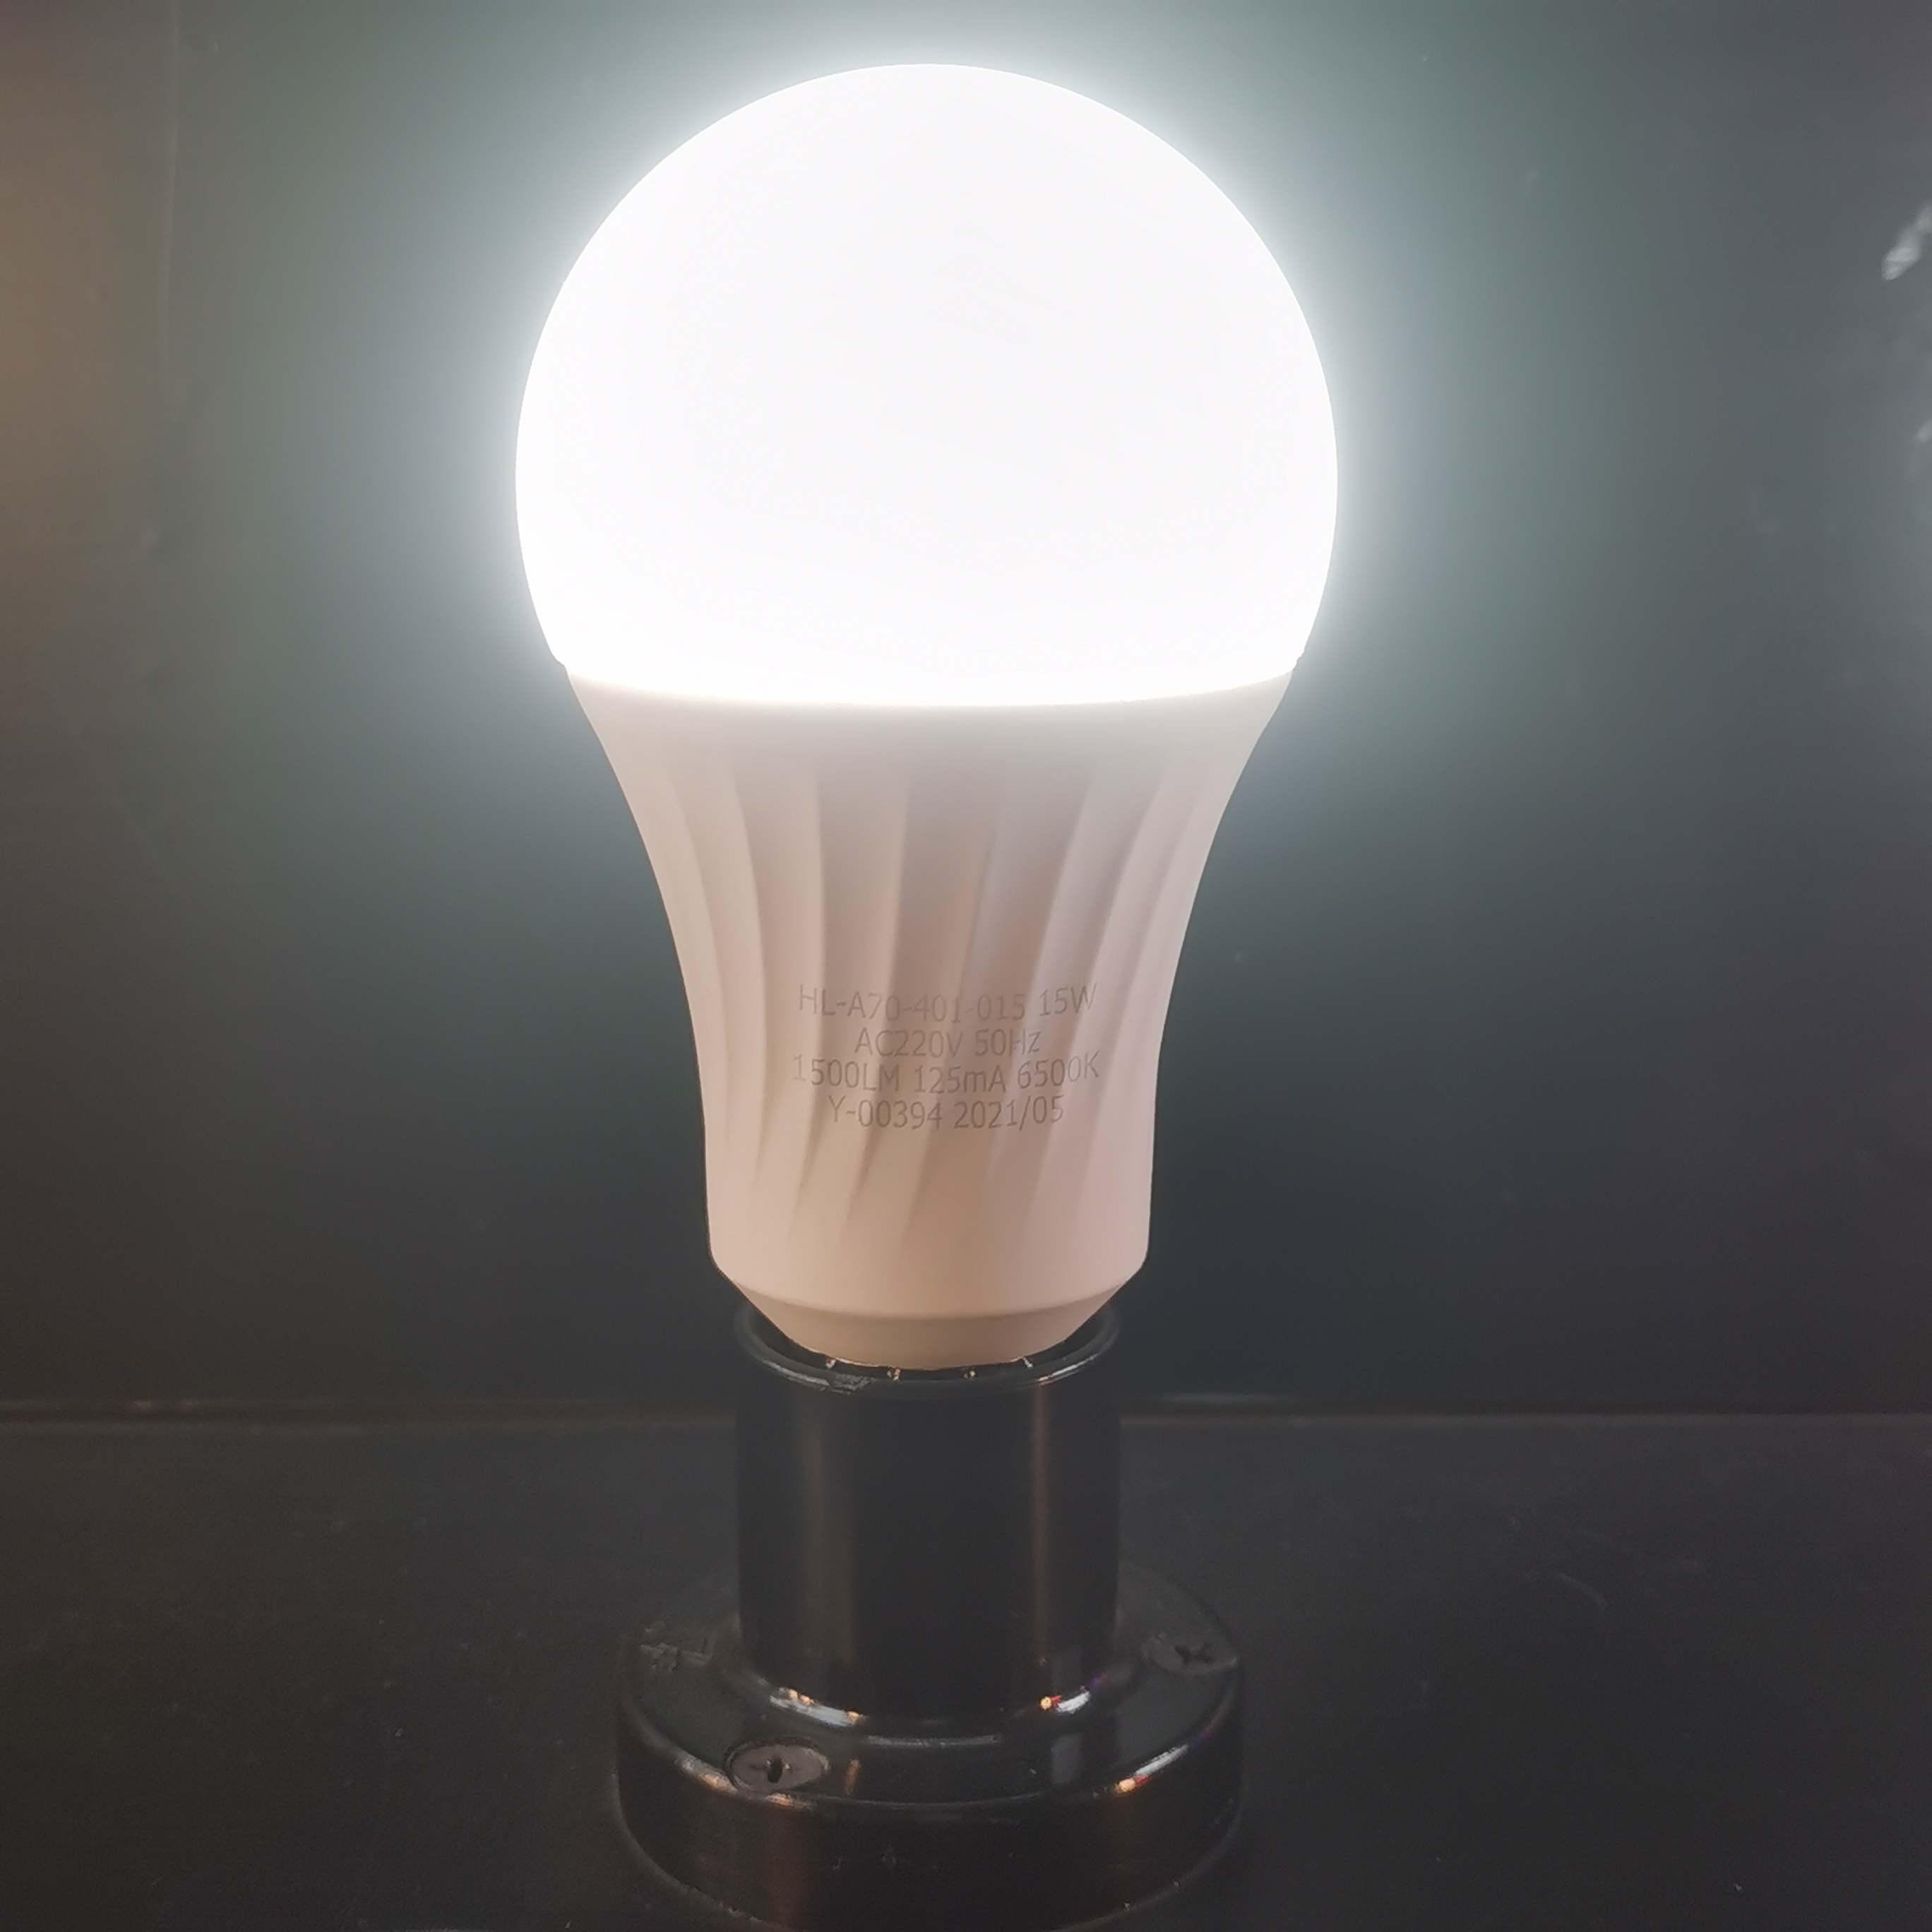 CTORCH PC ALUMINUM LIGHTING LED A SHAPE 3W BULB with E27 B22 5W 7W 10W 12W 15W 20W FACTORY HIGH QUALITY LAMP